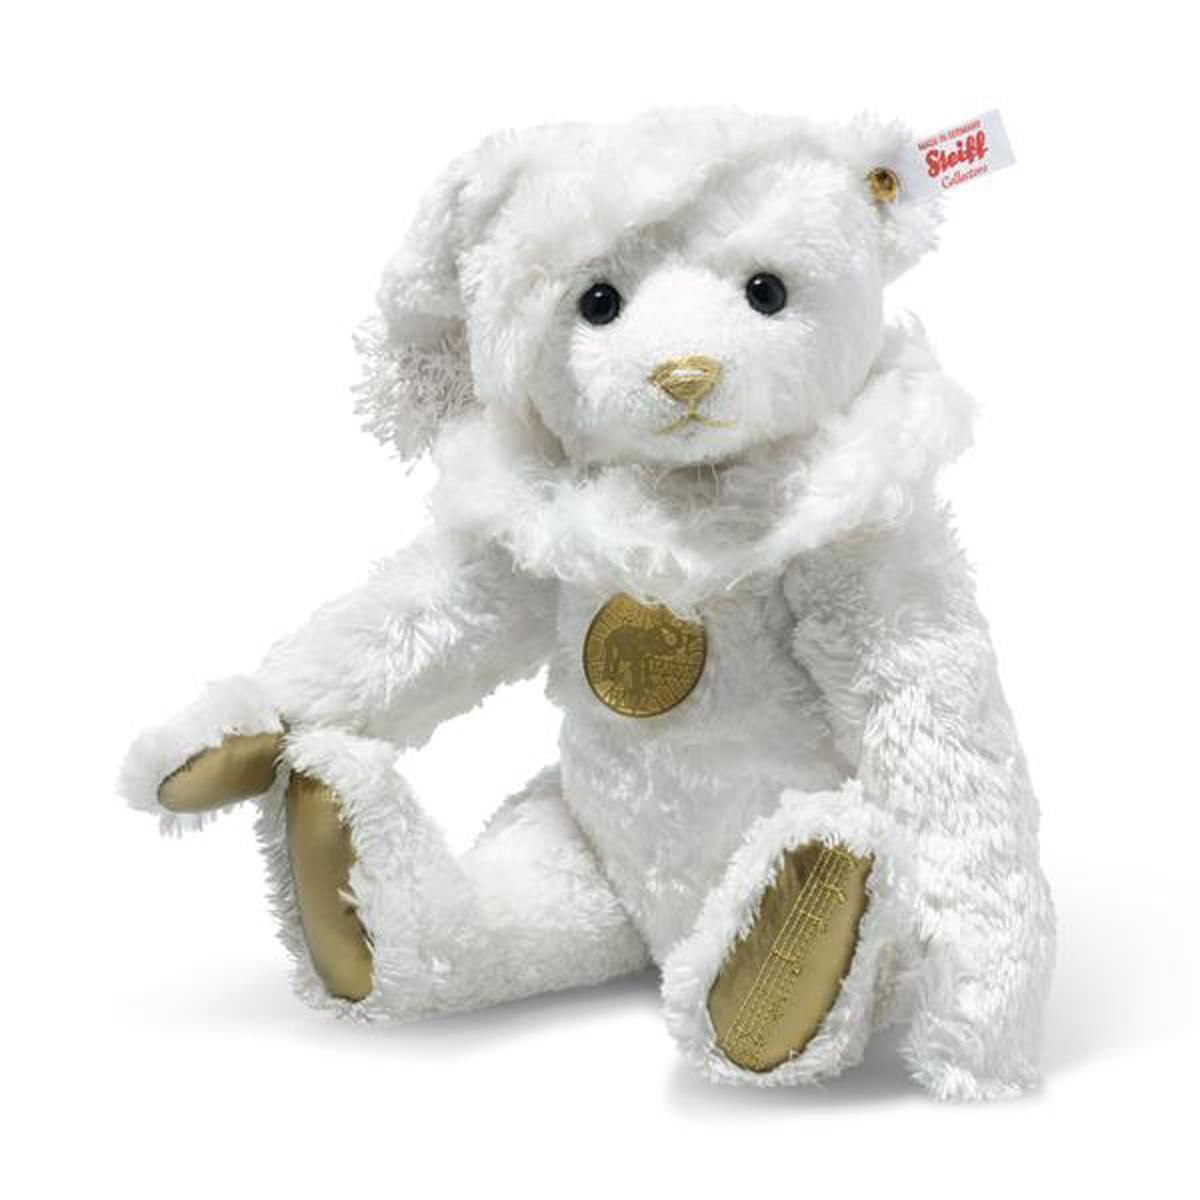 Steiff Limited Edition Teddies for Tomorrow White Christmas Teddy bear - 30 cm